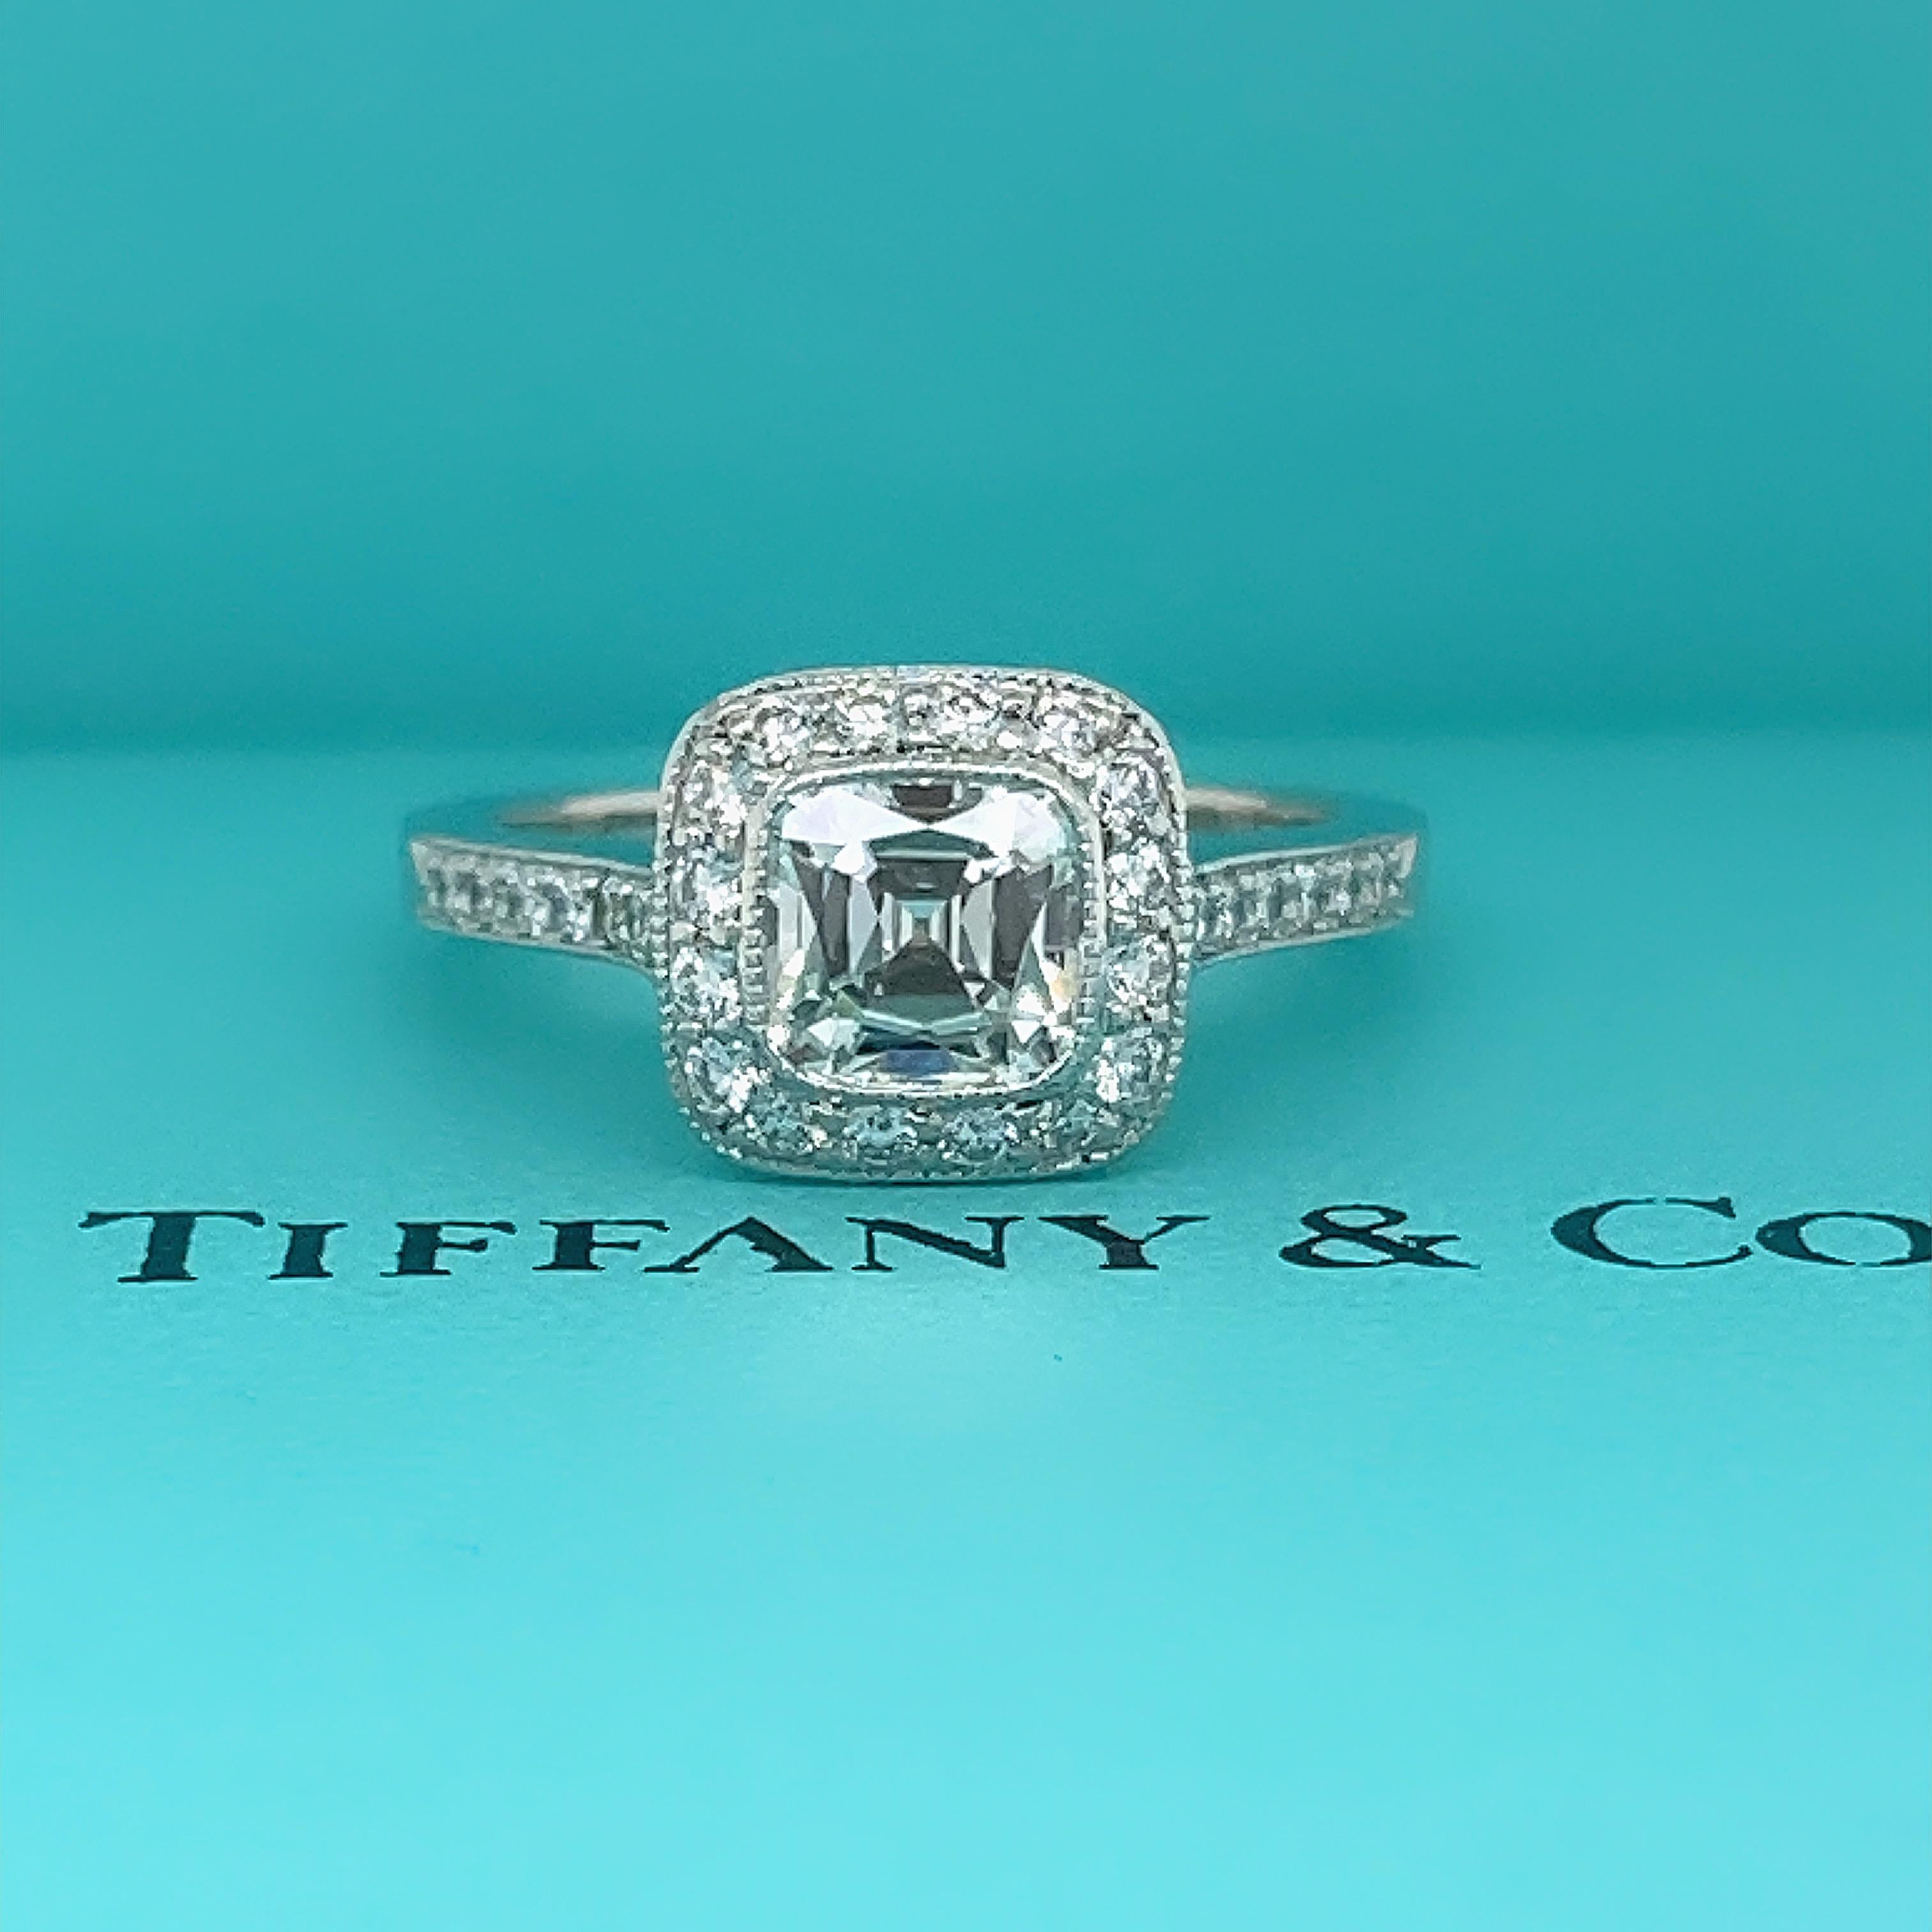 Tiffany & Co. LEGACY Cushion Diamond Engagement Ring
Style:  Halo
Ref. number:  24971589/J10100317
Metal:   Platinum PT950
Size:  6
TCW:  1.33 tcw
Main Diamond:  Cushion Modified Brilliant Diamond 1.00 cts
Color & Clarity:  I, VS2
Diamonds